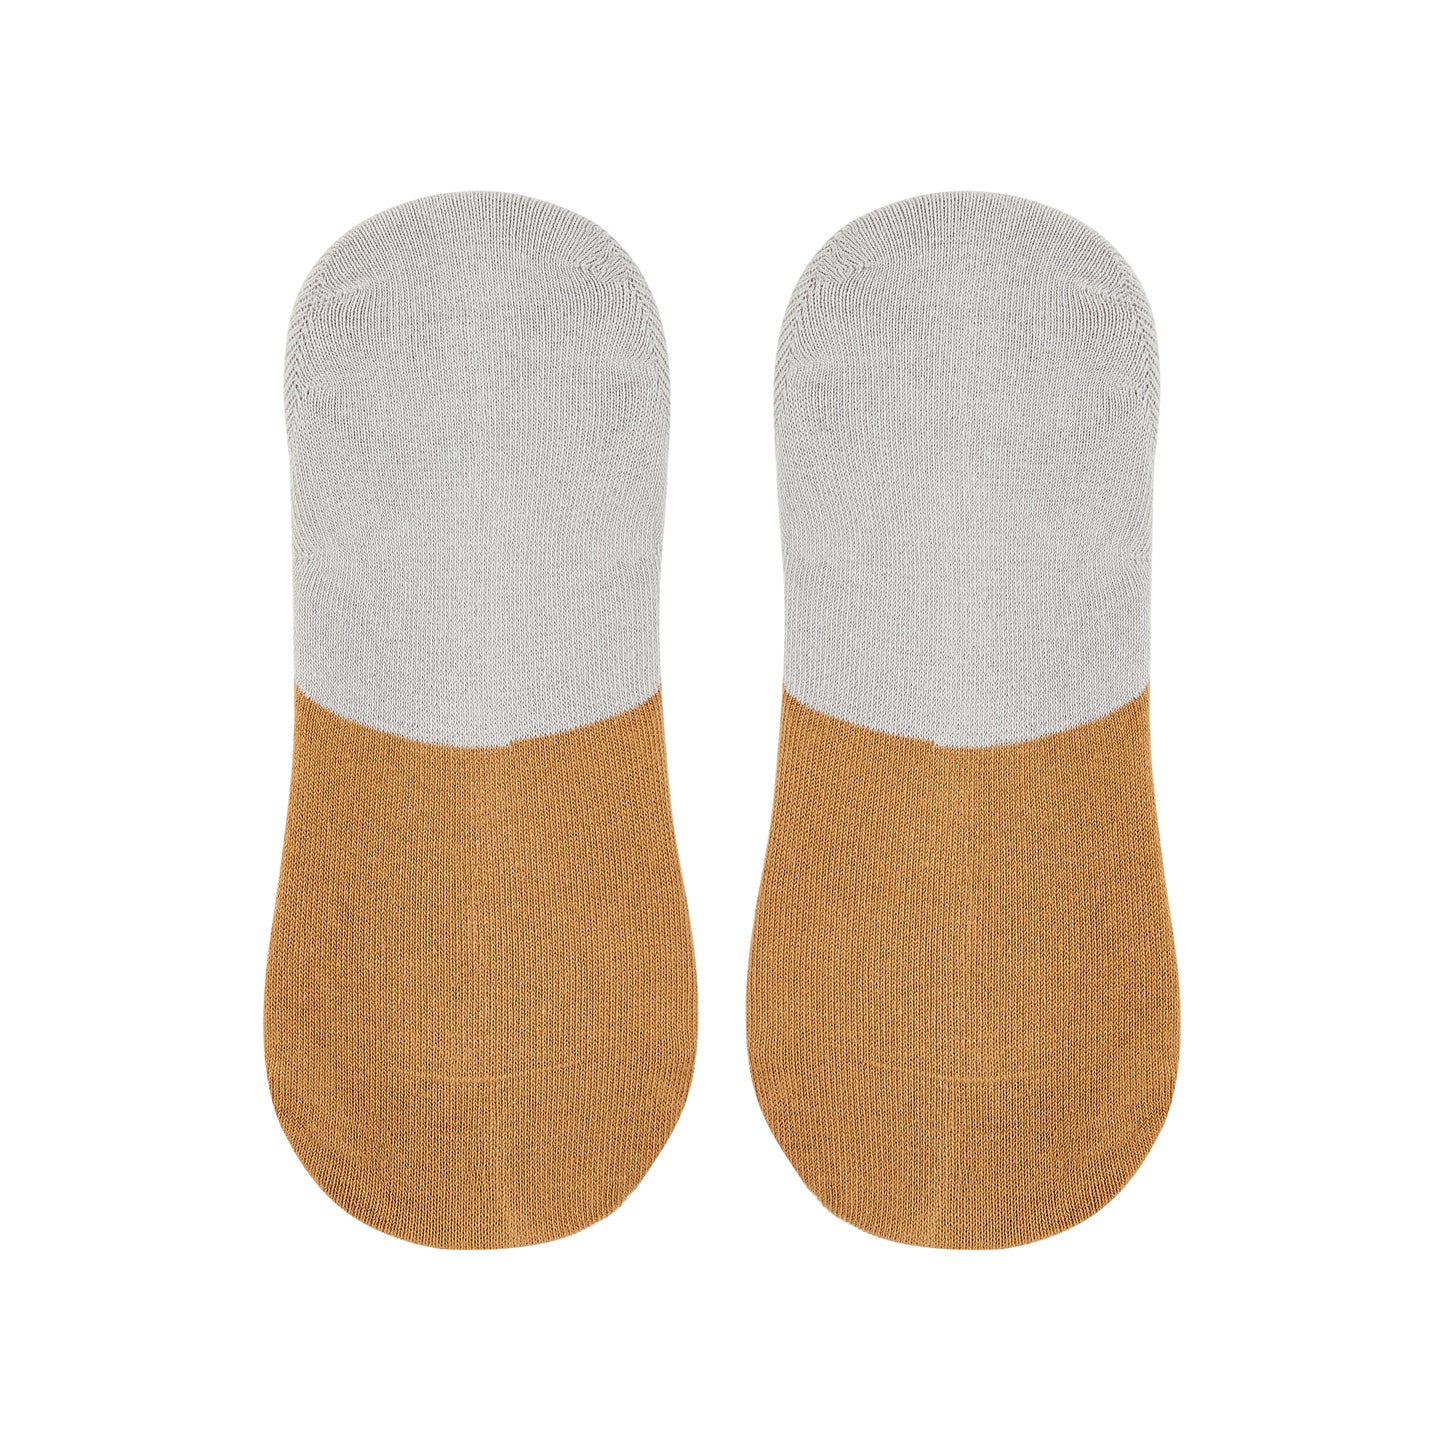 Men's Two-Tone Colored Invisible Foot Socks - IDENTITY Apparel Shop